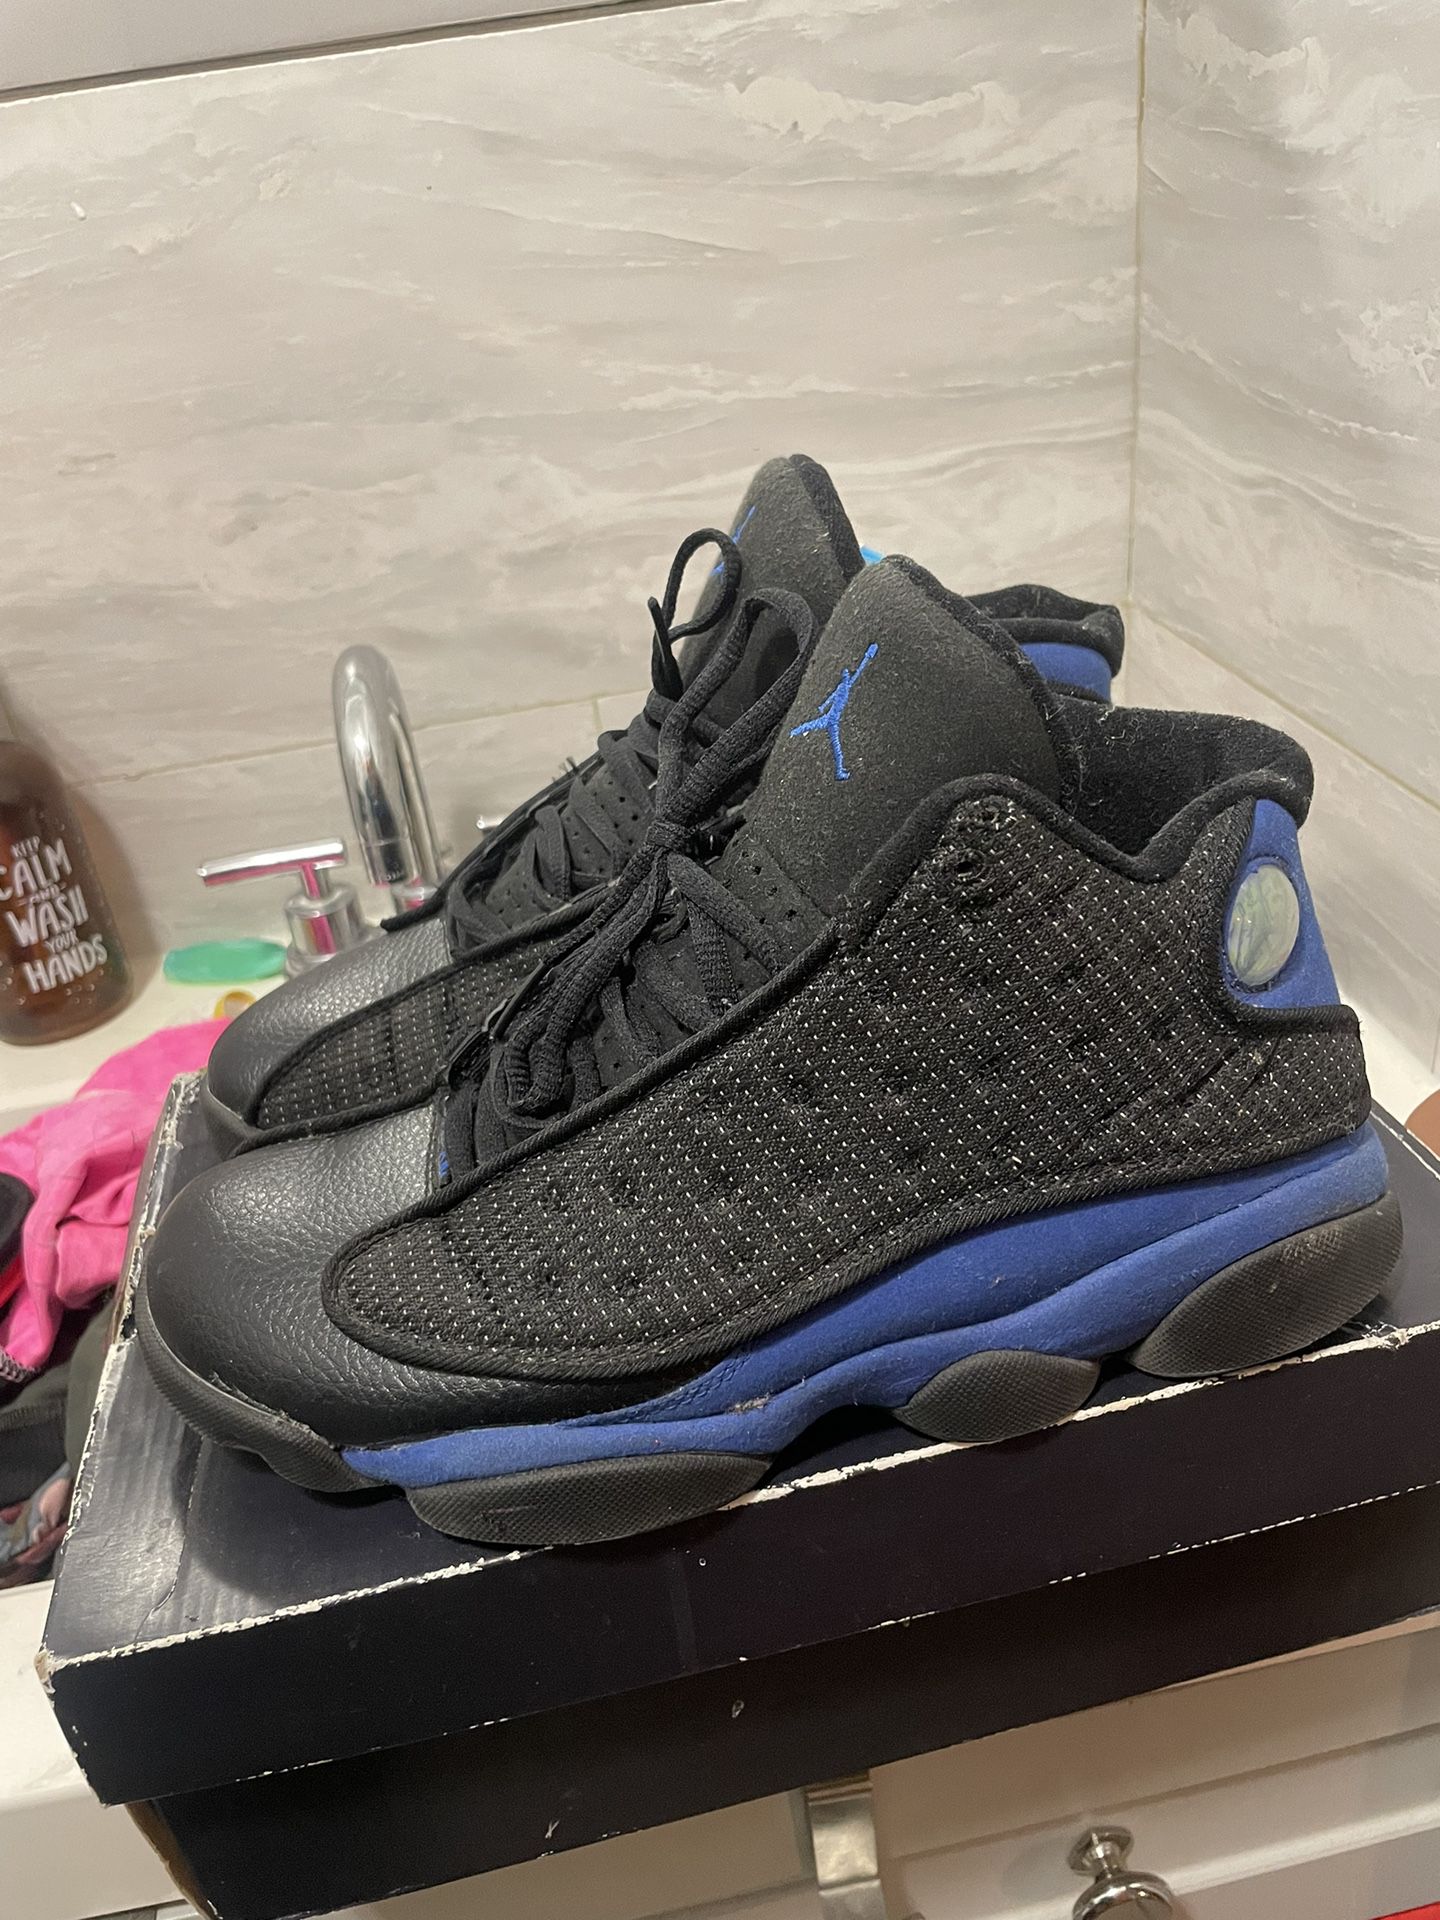 Jordan 13s Black And Blue 